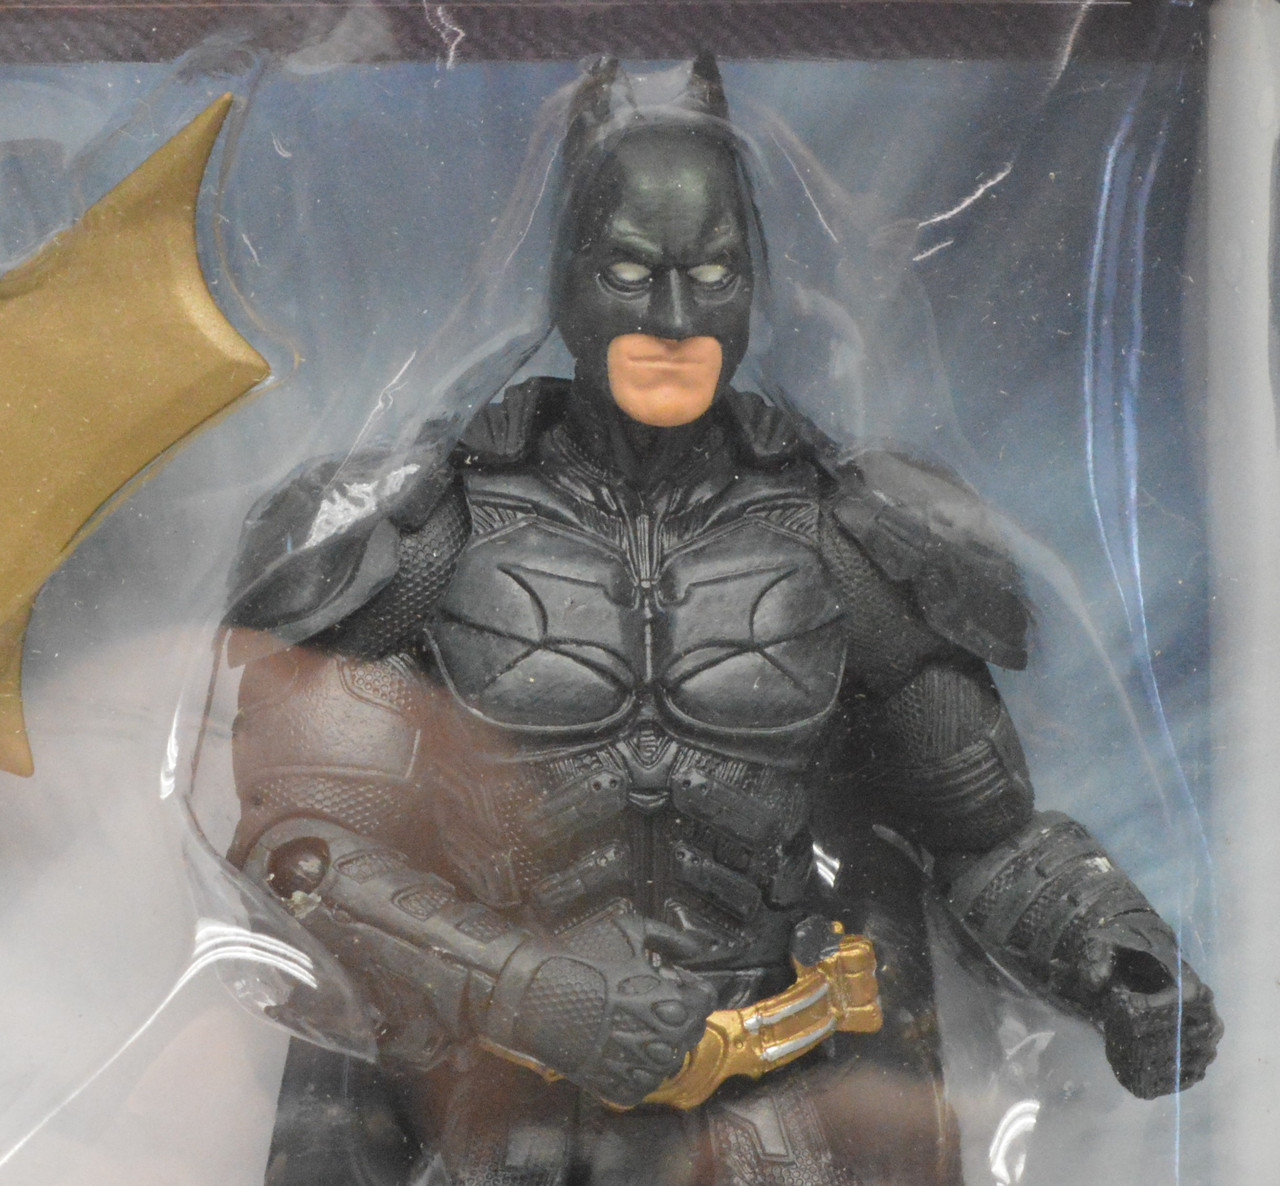 Mattel Batman: The Dark Knight Night Vision with Crime Scene Evidence